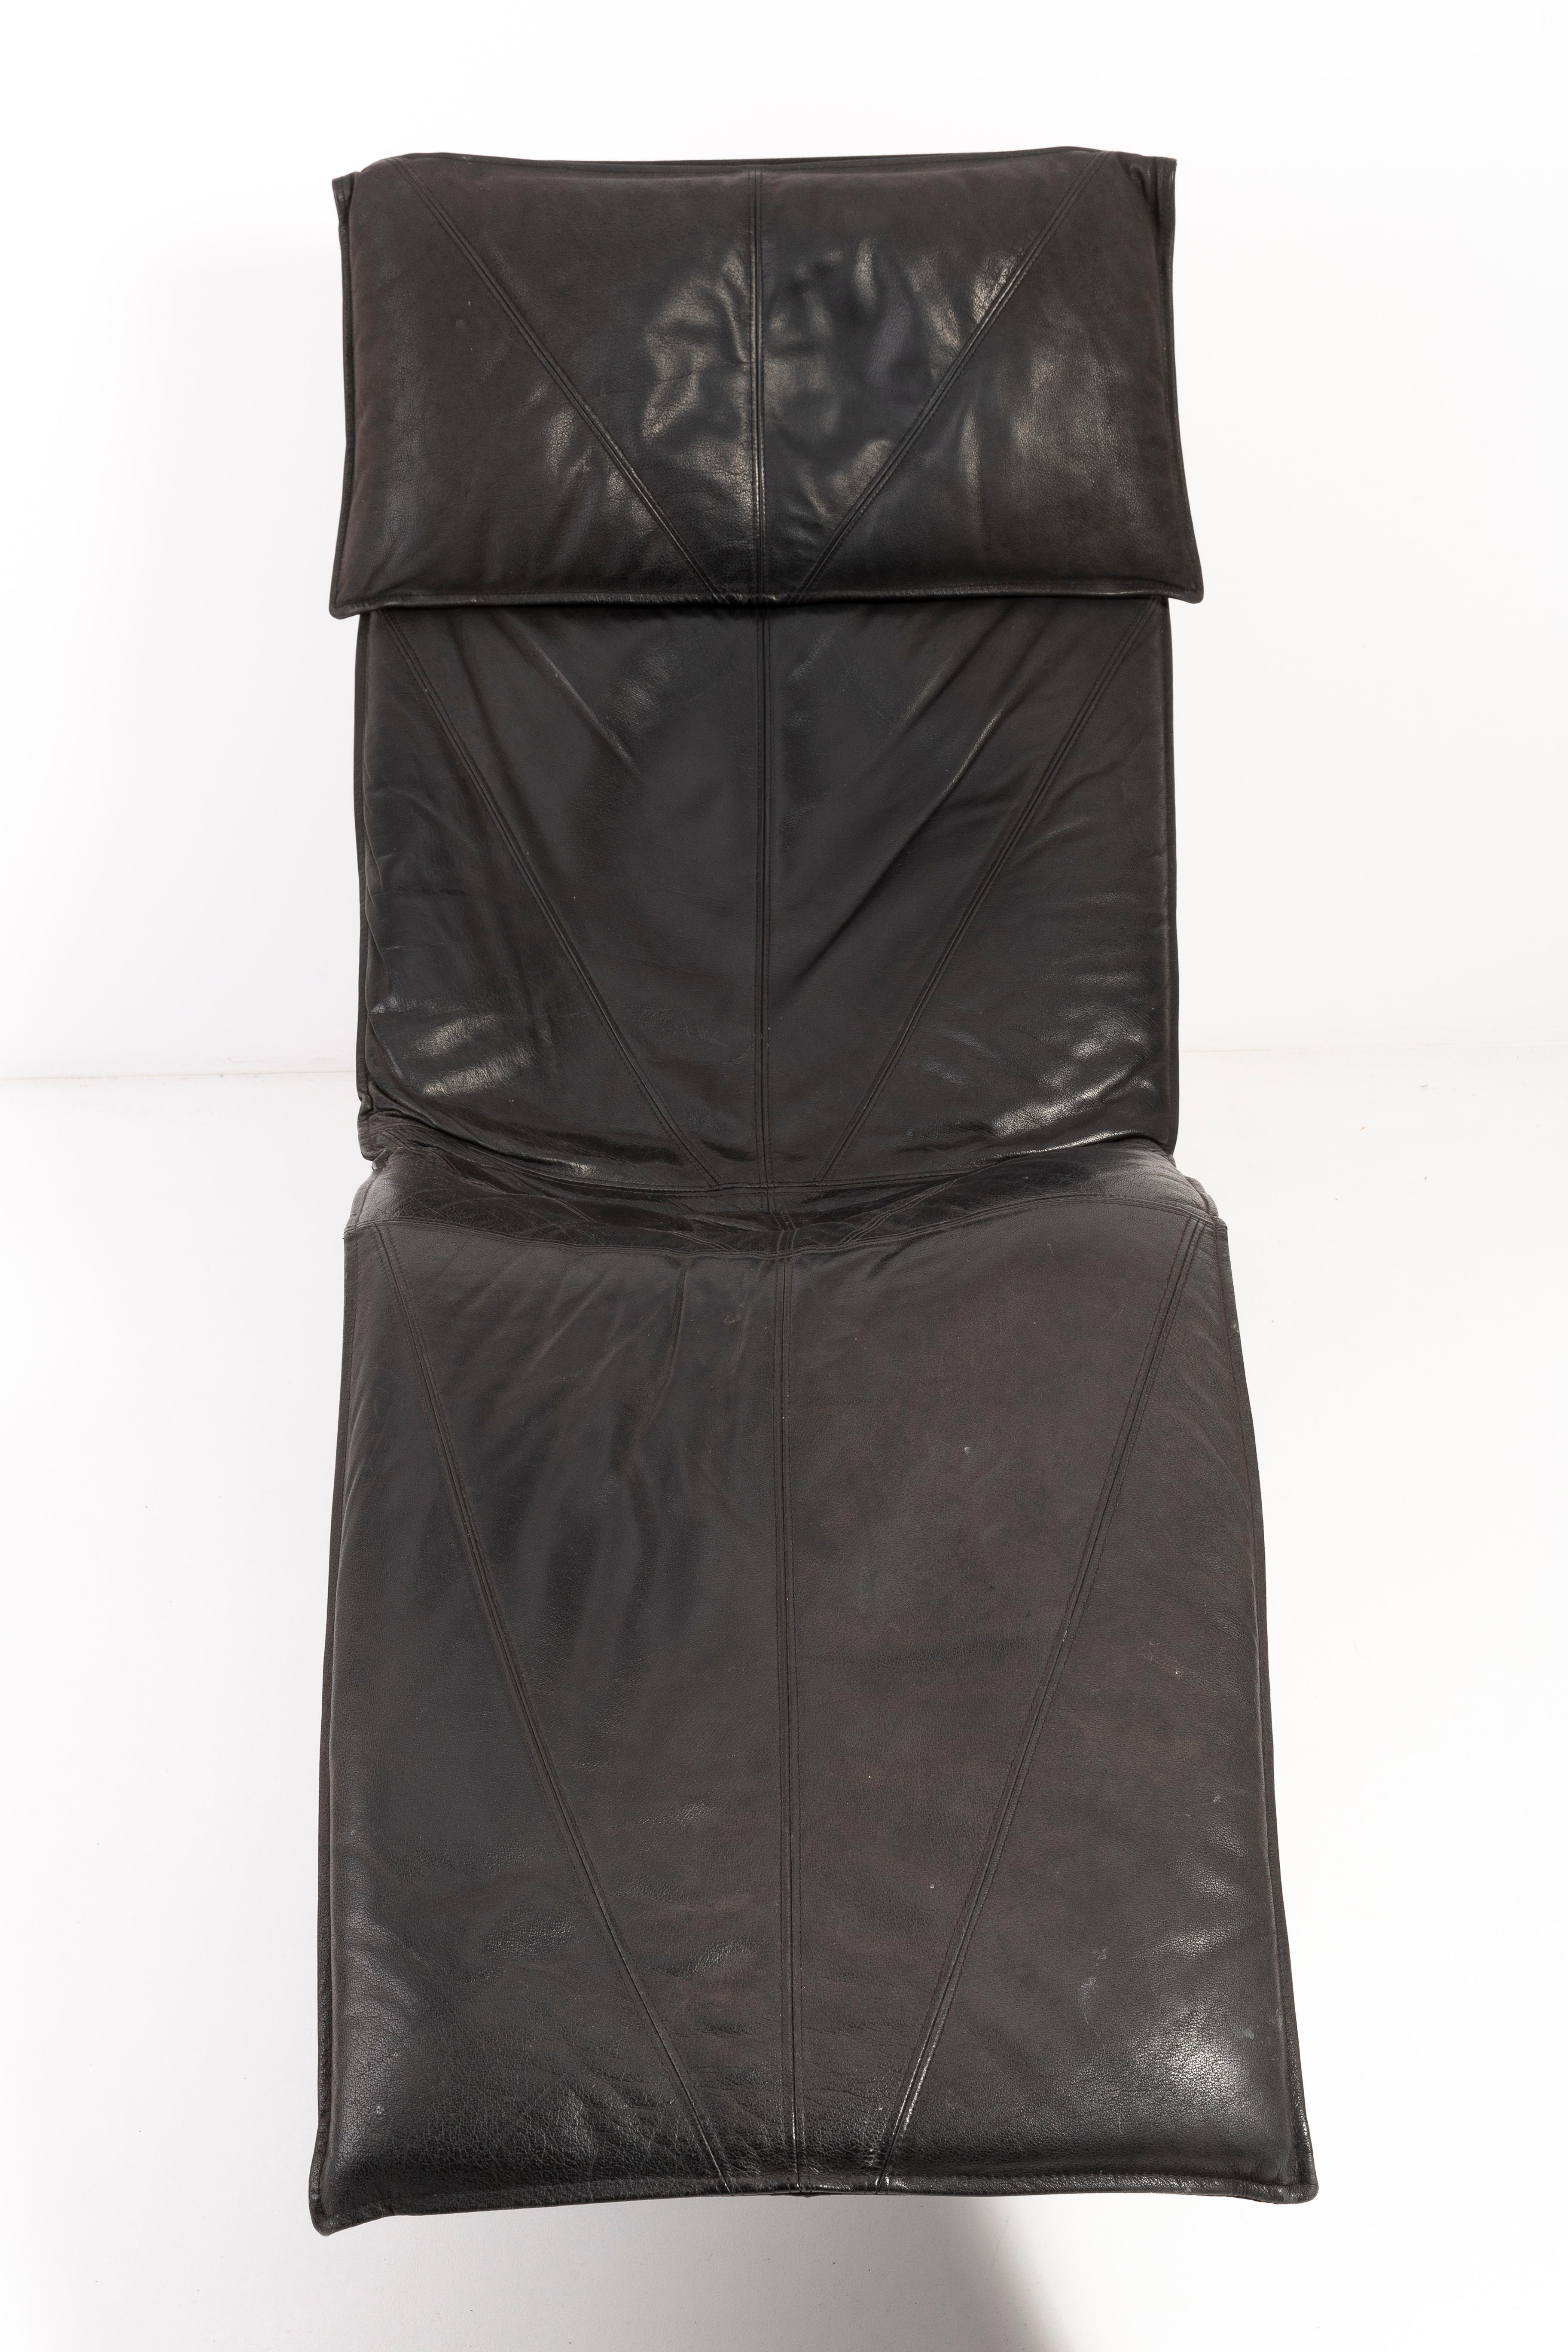 Midcentury Danish Modern Black Leather Chaise Lounge Chair by Tord Björklund 5